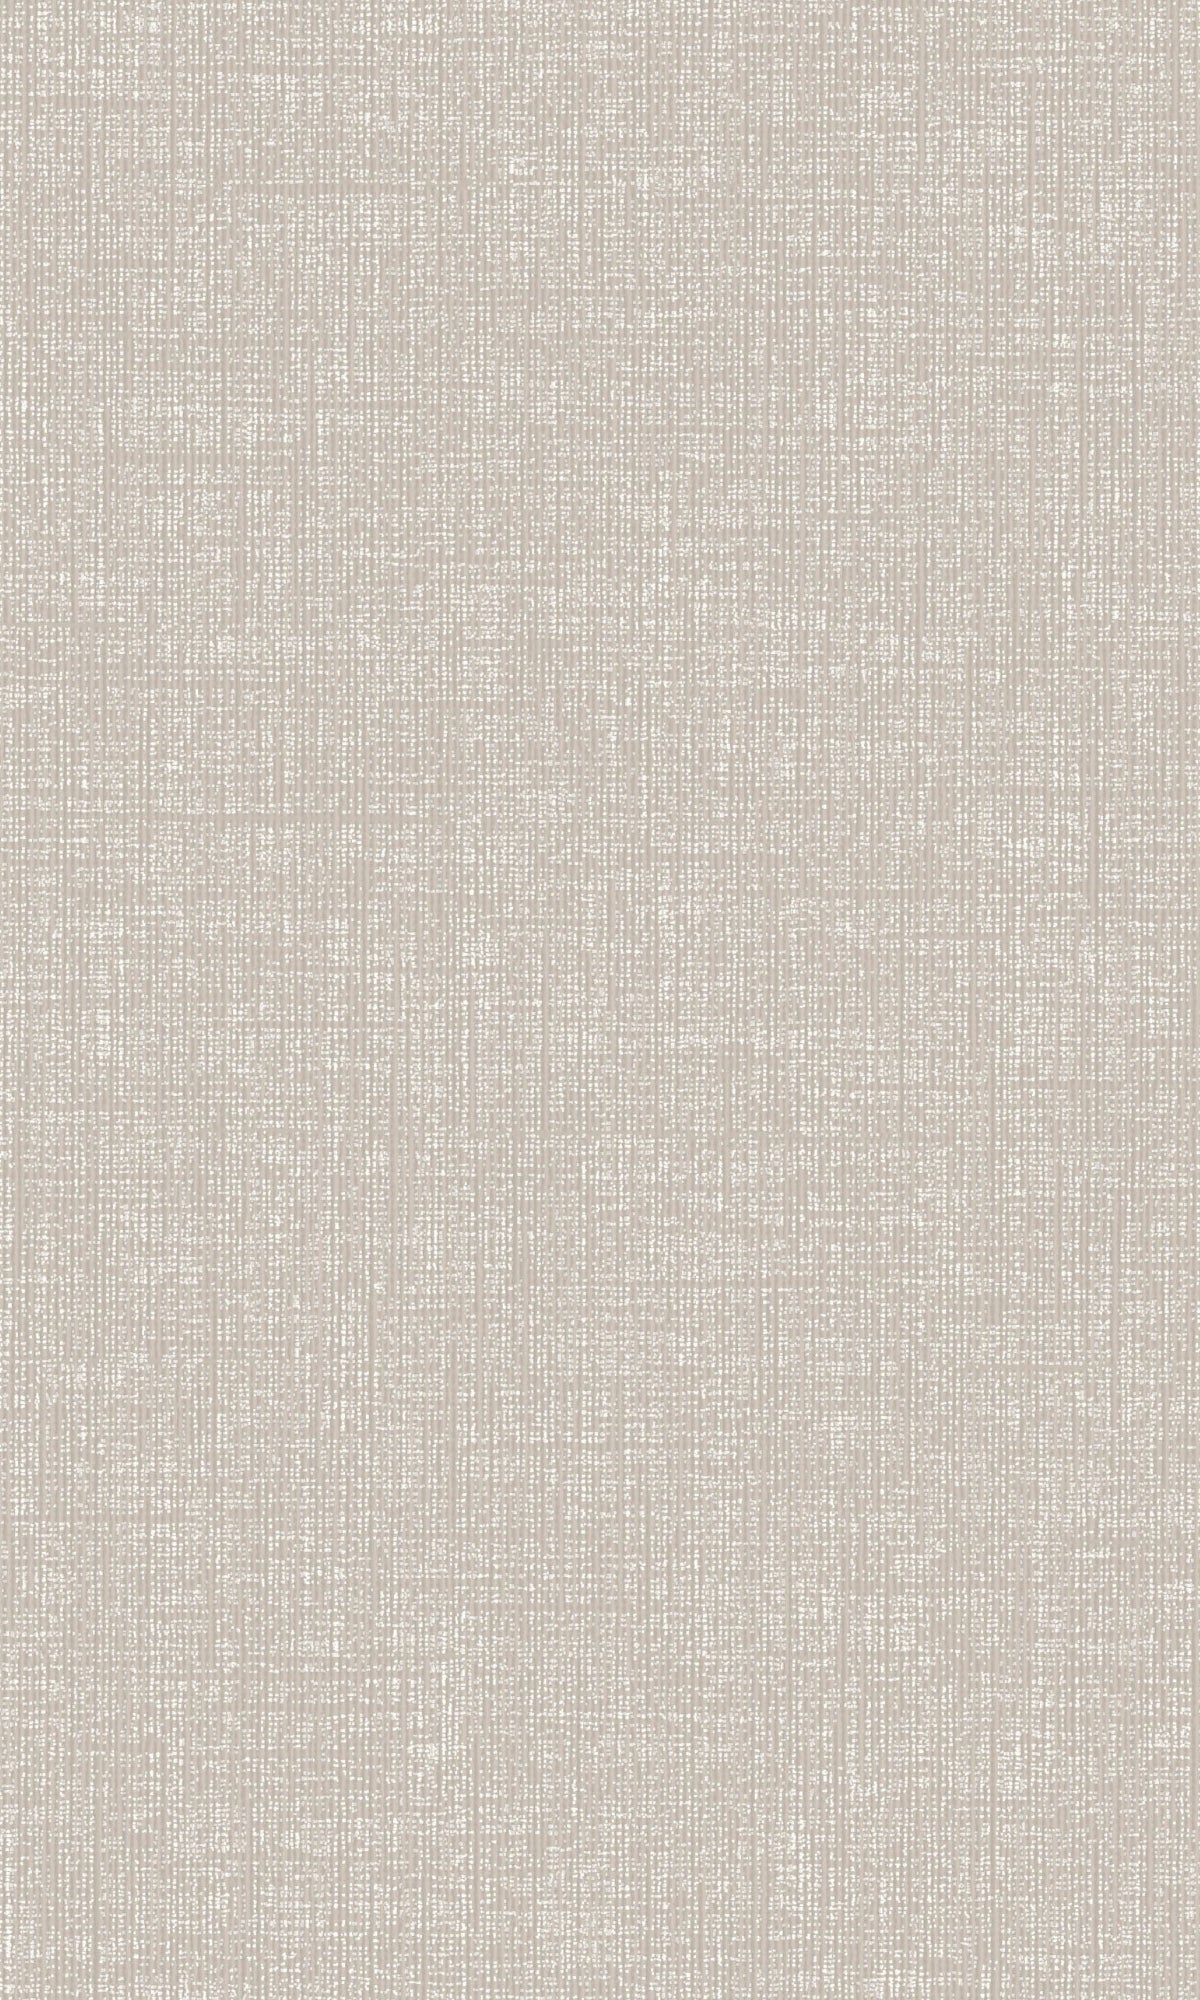 Tan Plain Linen Commercial Wallpaper C7529